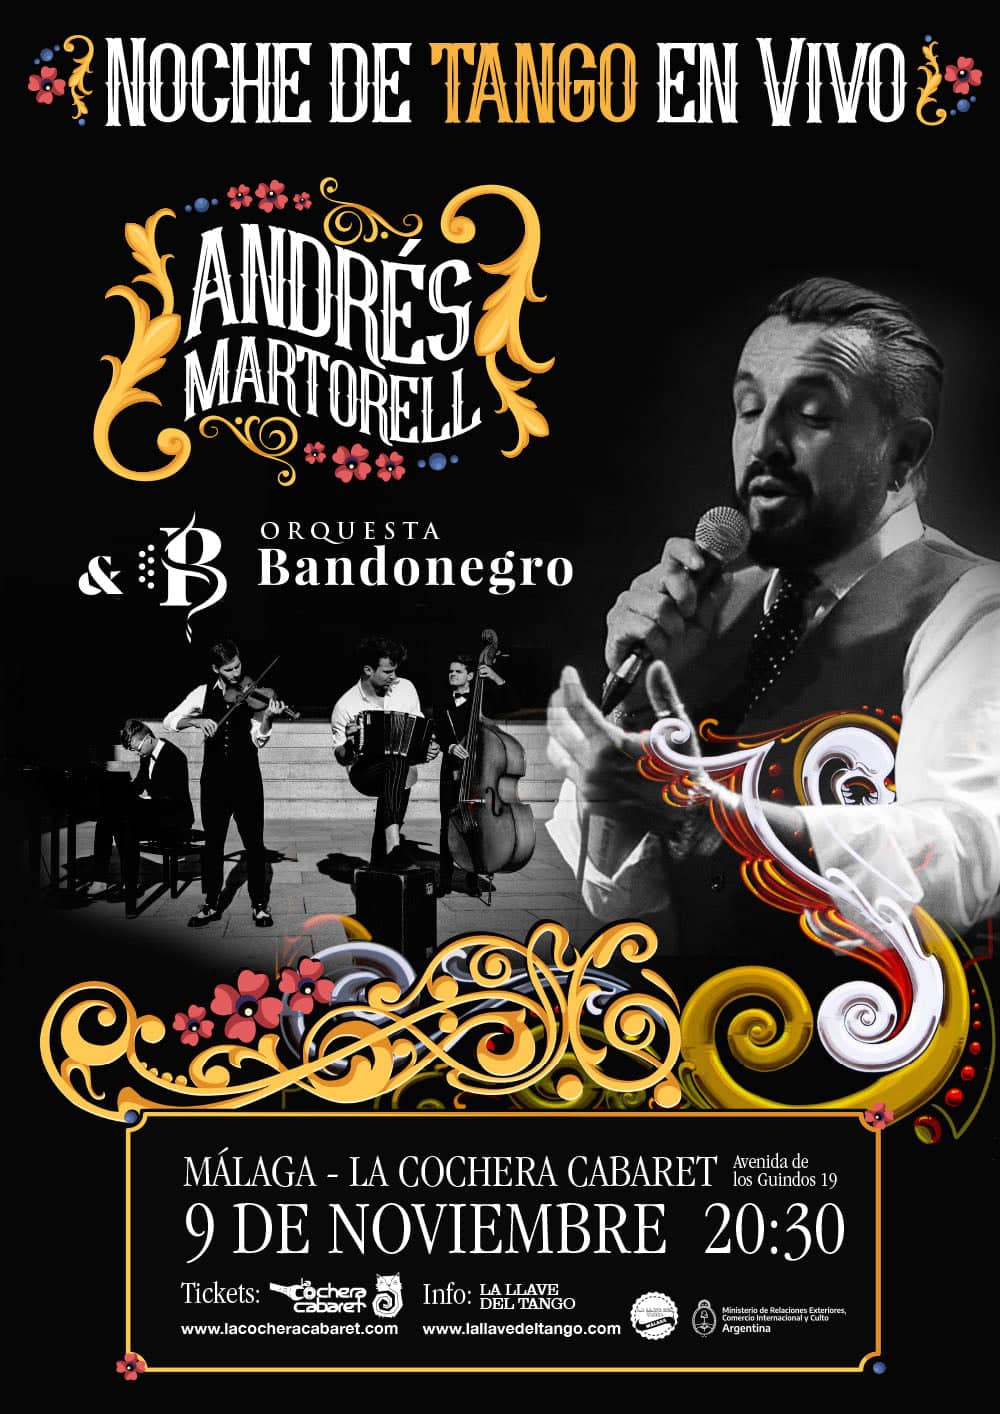 Bandonegro & Andres Martorell